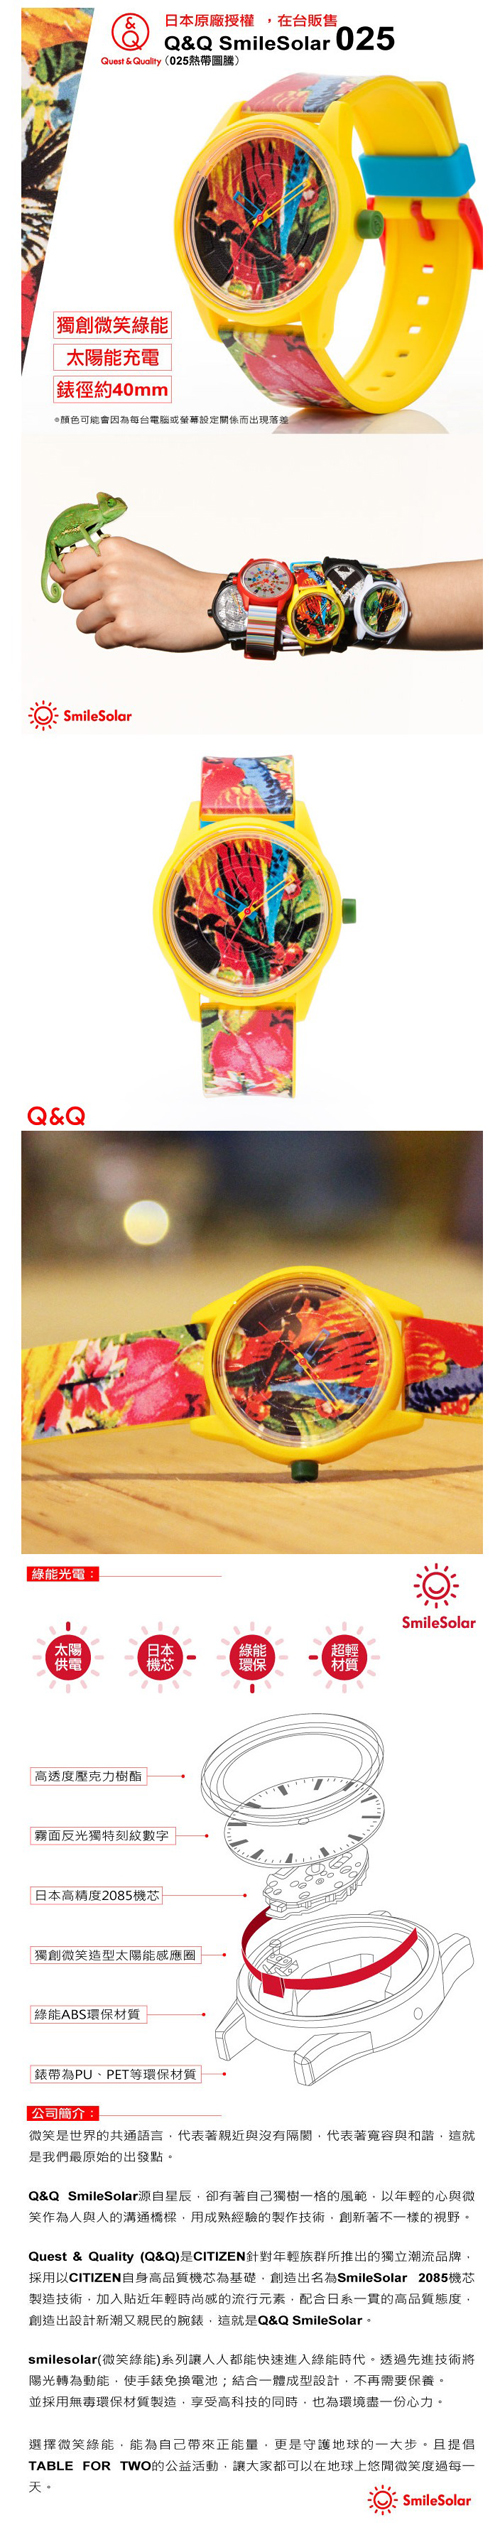 Q＆Q SmileSolar 仲夏狂熱SUMMER款 太陽能手錶 (025 熱帶圖騰/40mm)